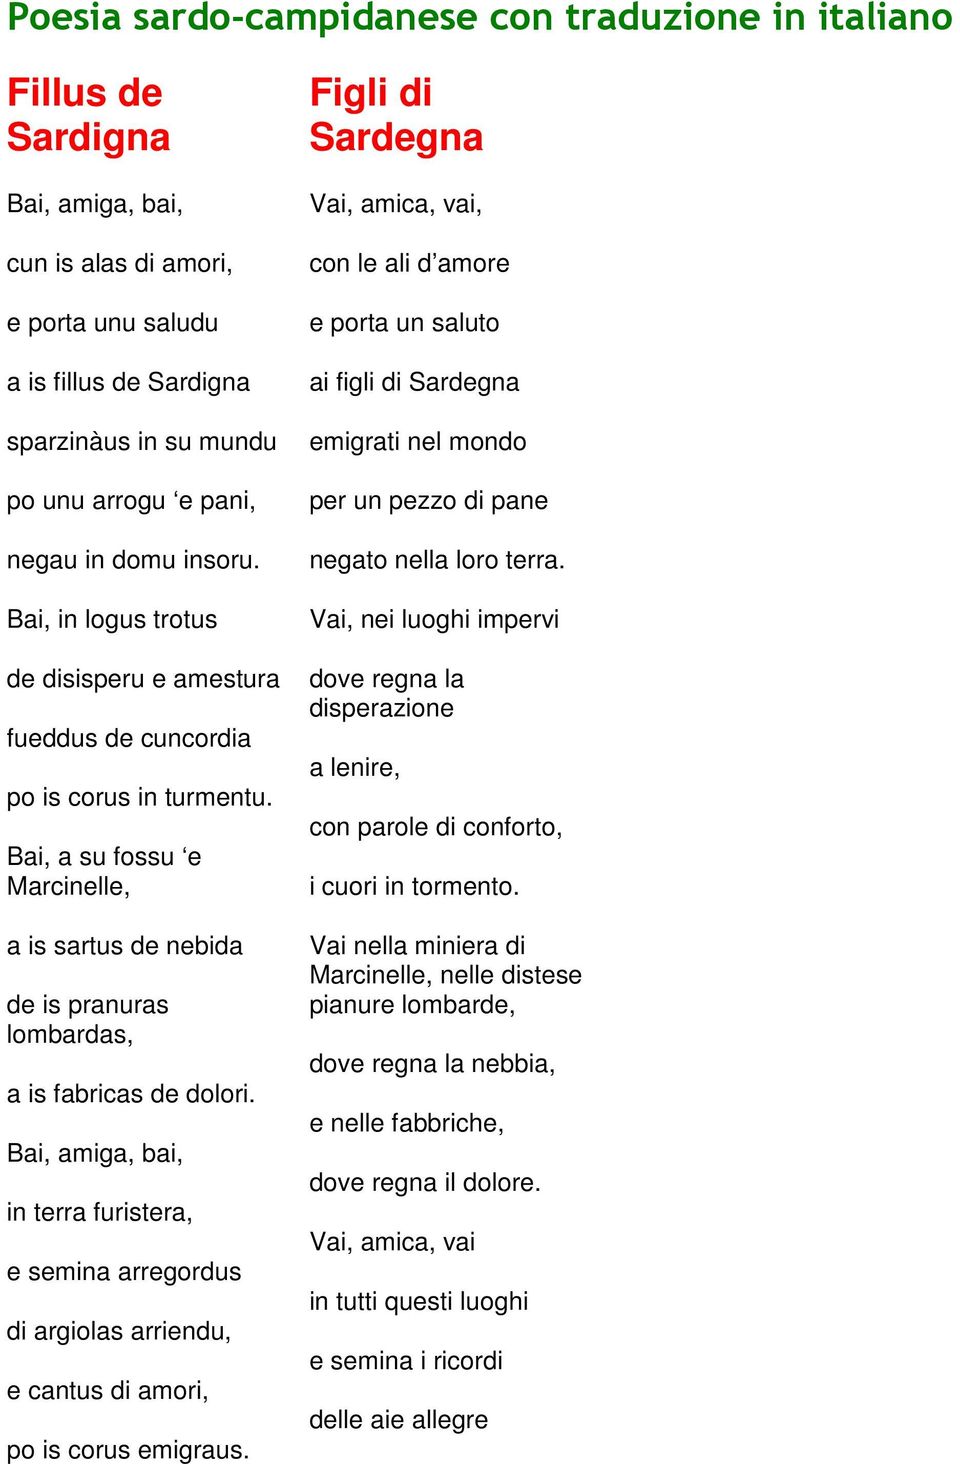 Poesie Di Natale In Sardo.Poesia Sardo Campidanese Con Traduzione In Italiano Fillus De Sardigna Pdf Free Download